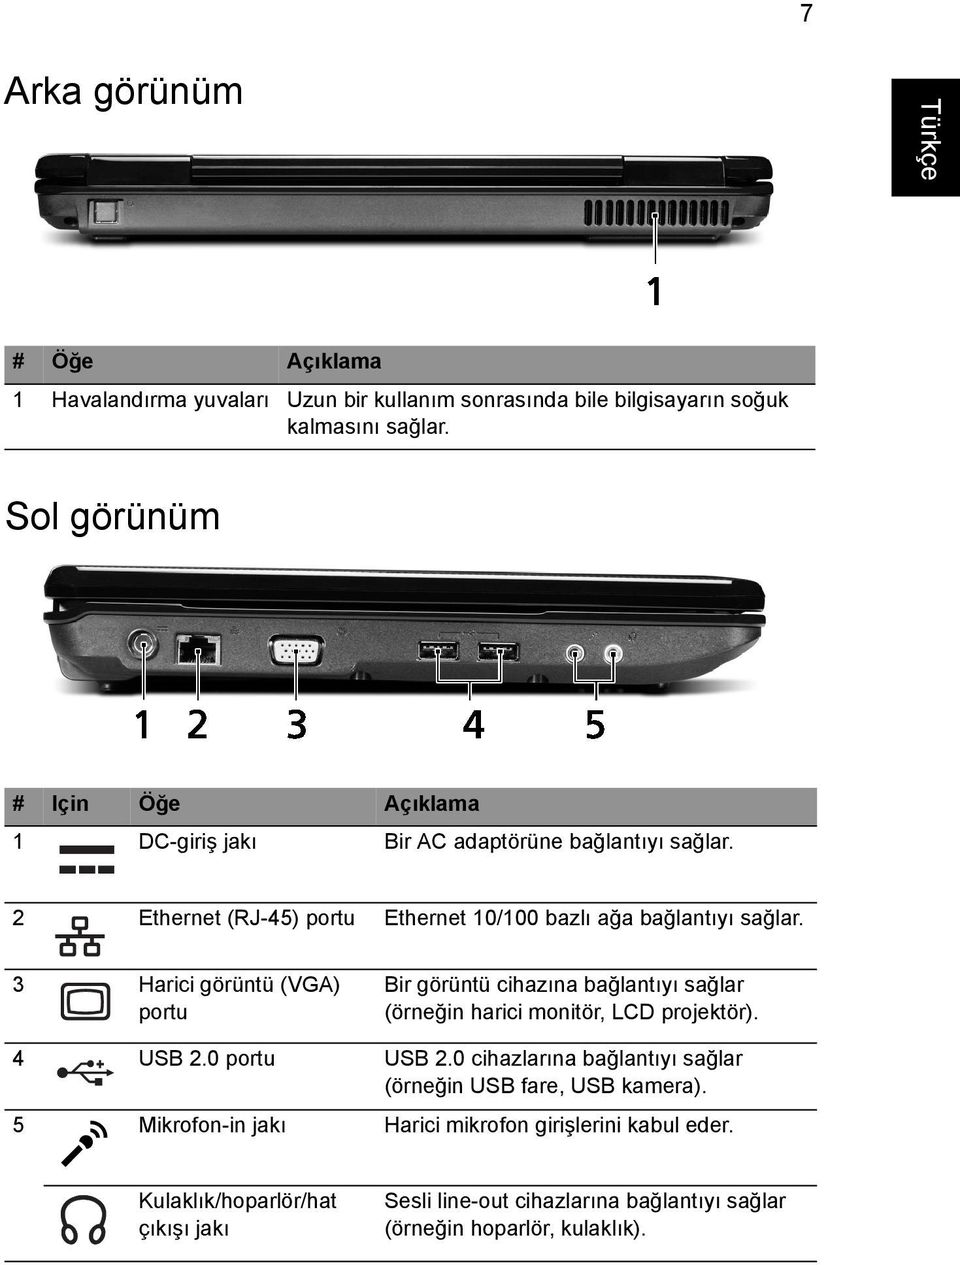 3 Harici görüntü (VGA) portu Bir görüntü cihazına bağlantıyı sağlar (örneğin harici monitör, LCD projektör). 4 USB 2.0 portu USB 2.